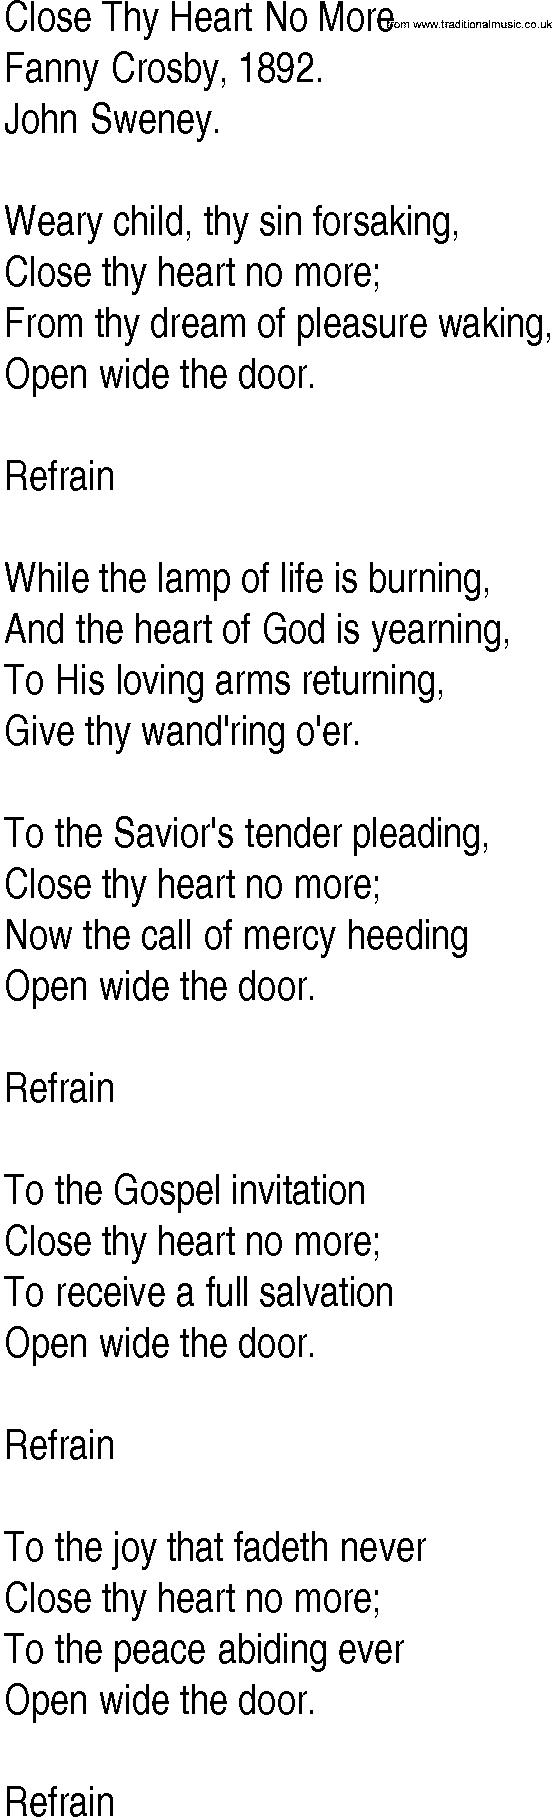 Hymn and Gospel Song: Close Thy Heart No More by Fanny Crosby lyrics